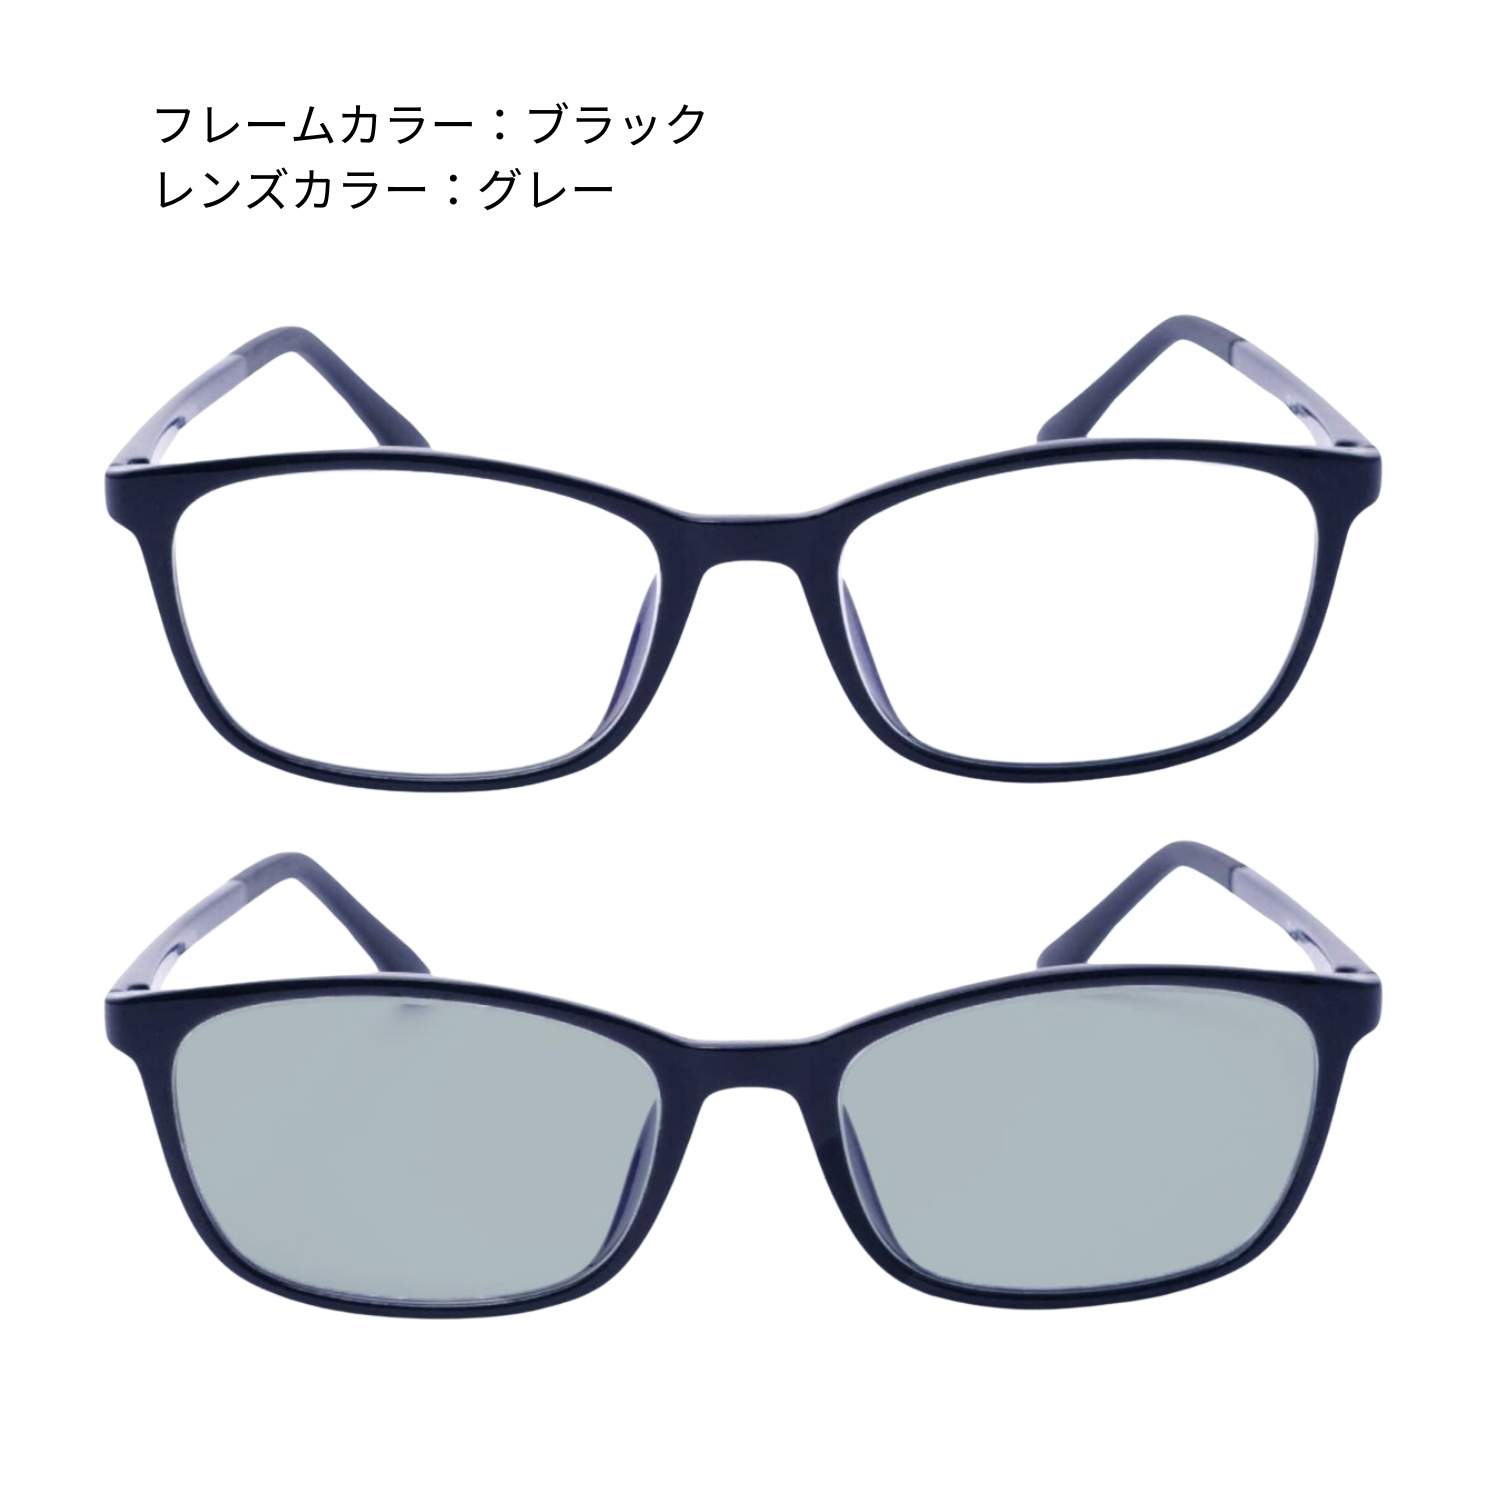 EVERNEVER メガネ 調光 度付き 調光レンズ 調光サングラス 度付き眼鏡 度付メガネ 度付きめがね おすすめ 変色レンズ メンズ おしゃれ EV-004-NS-PHOTO｜readingglasses｜11